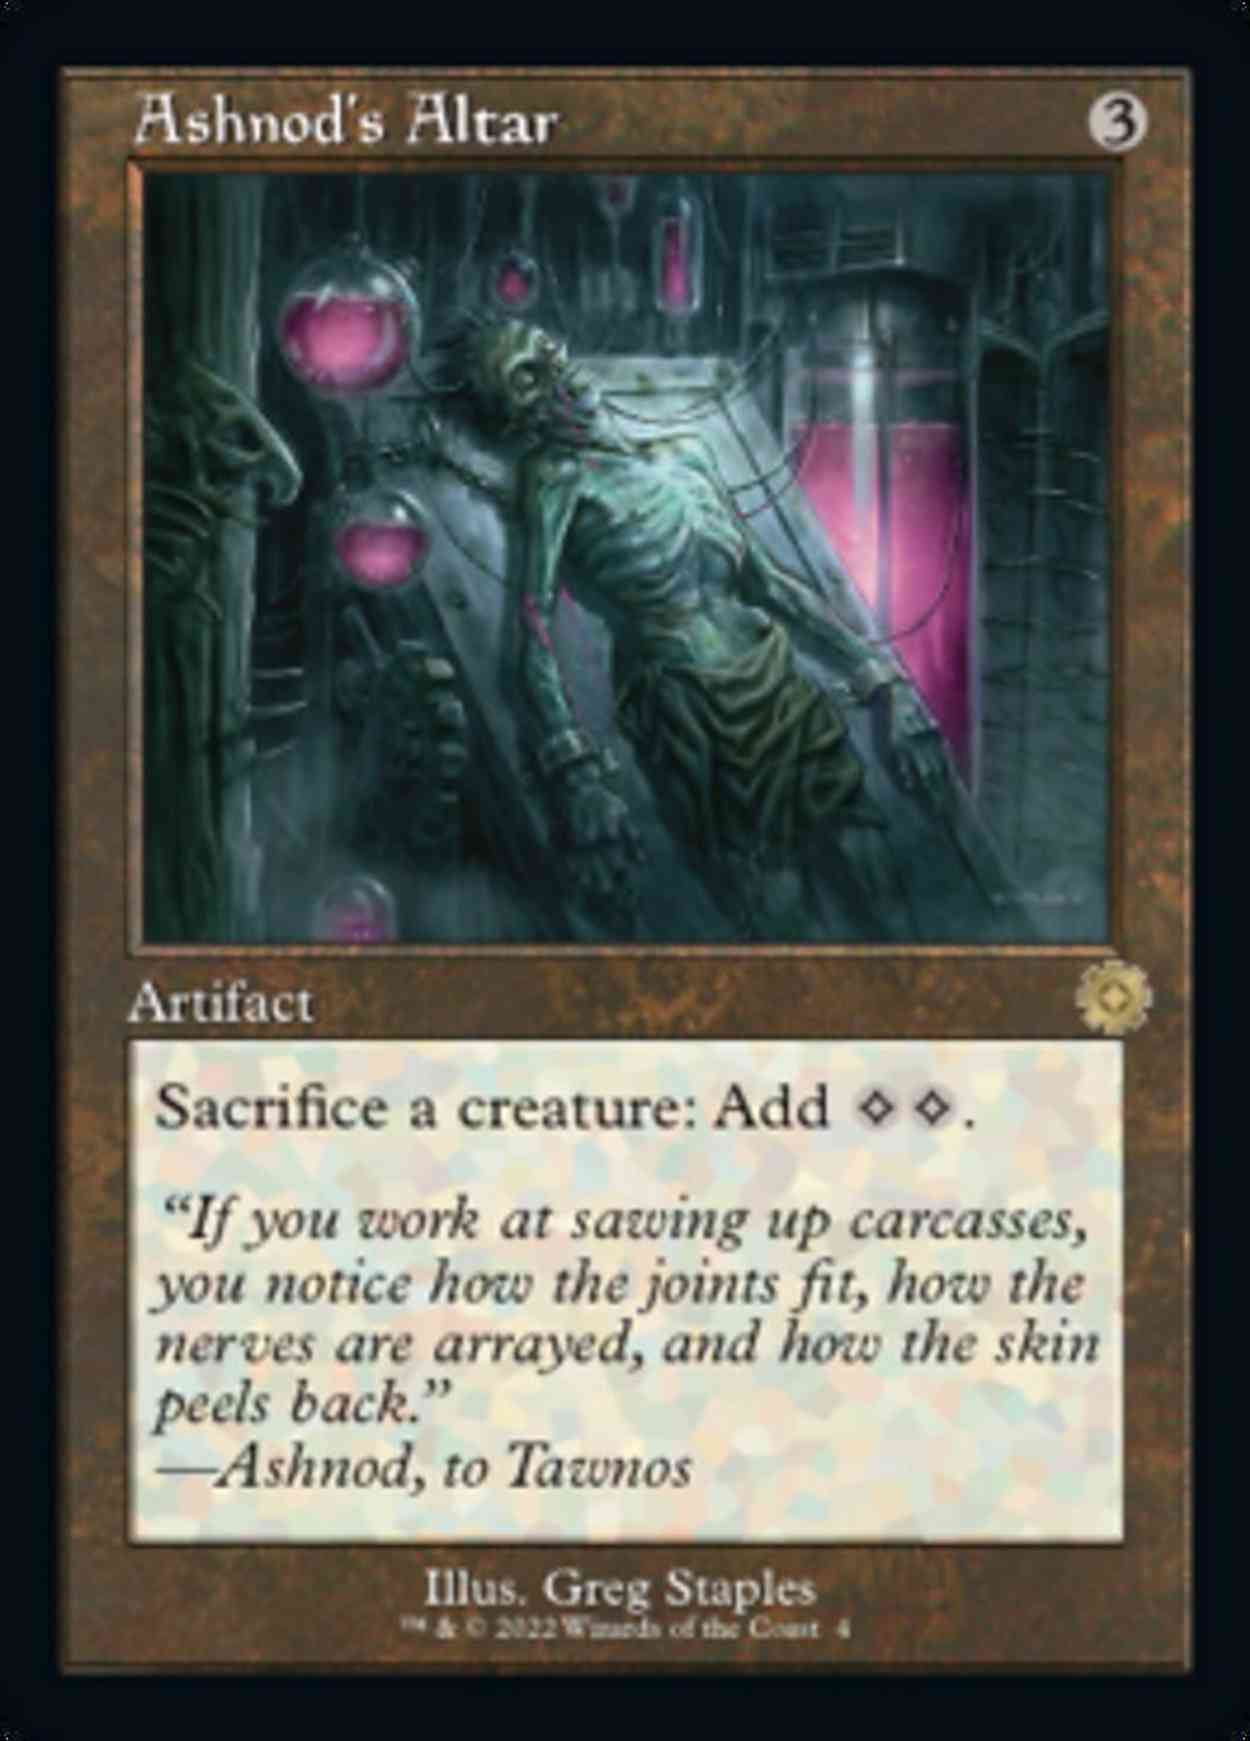 Ashnod's Altar magic card front